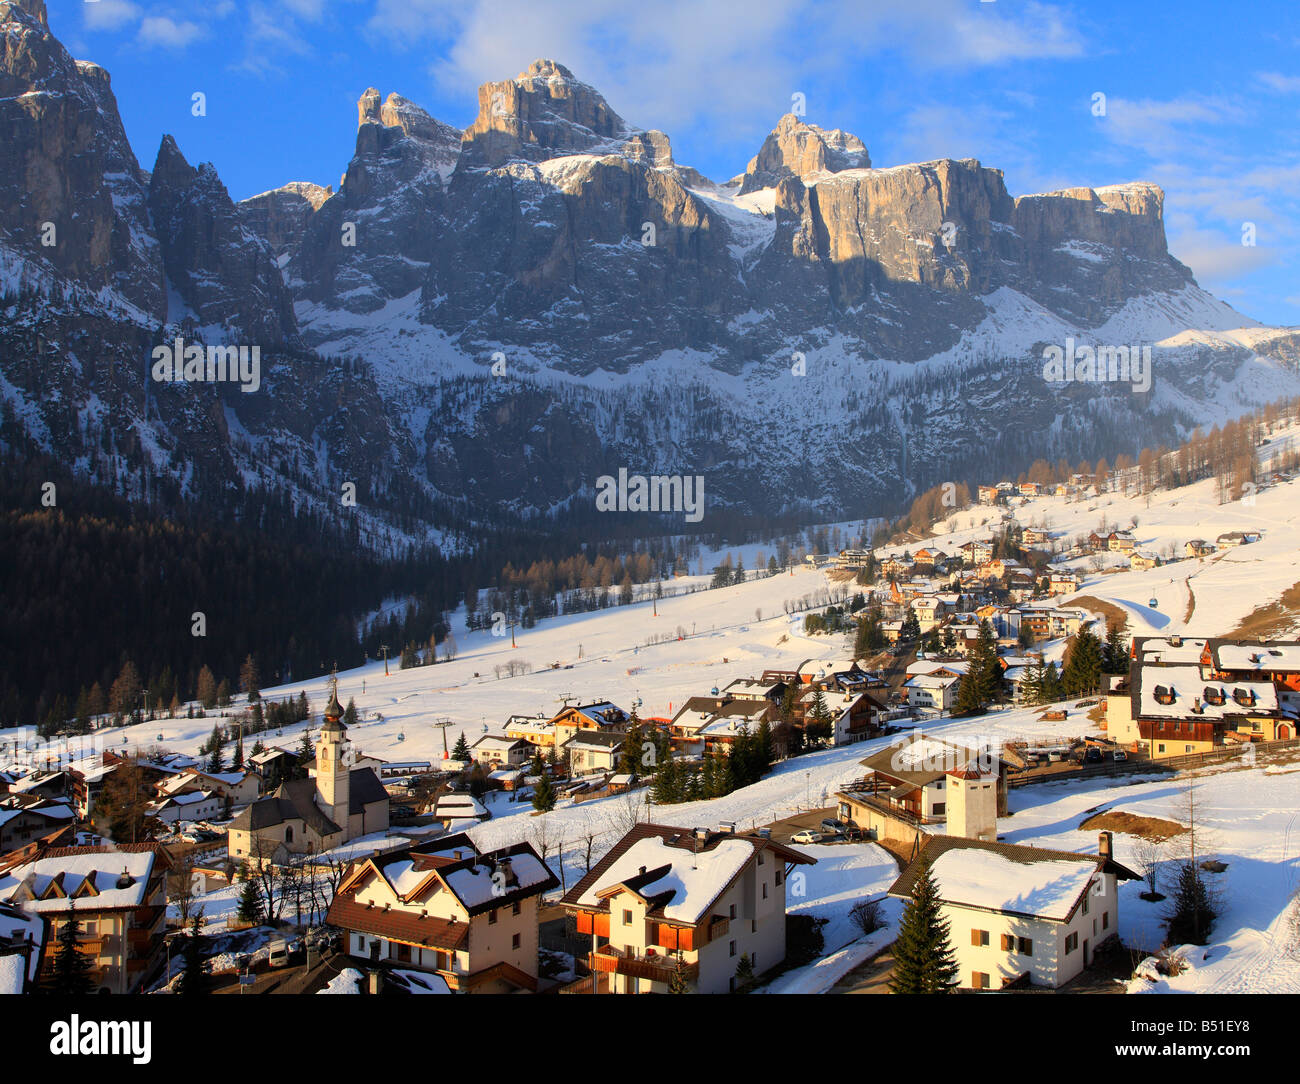 Village of Colfosco in winter snow, Dolomites, Italy Stock Photo